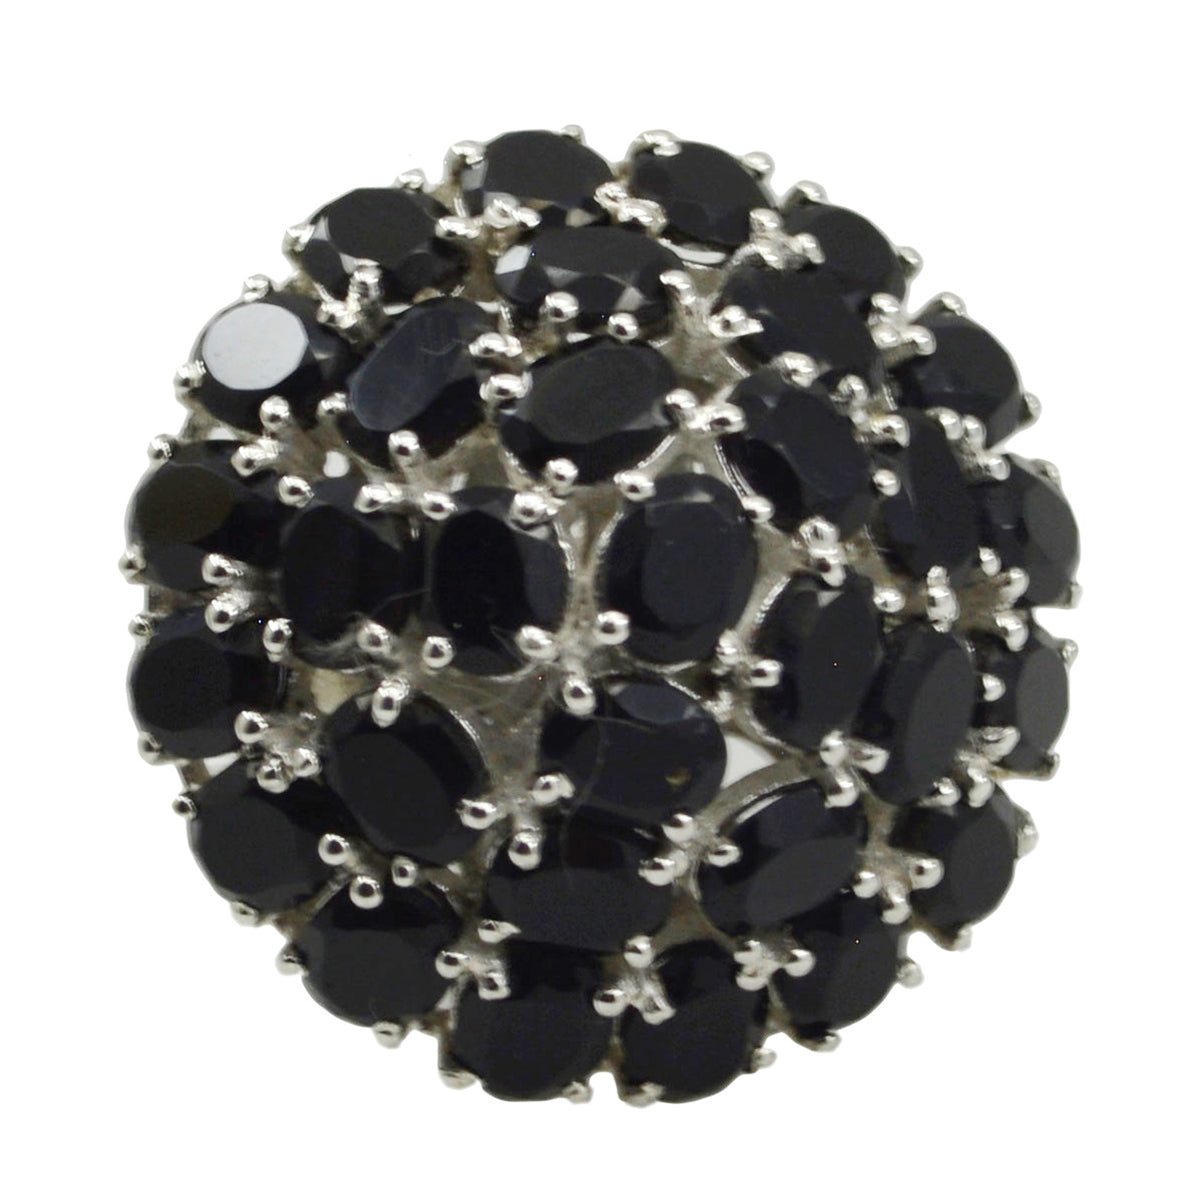 Riyo Seductive Gems Black Onyx 925 Silver Ring Jewelry Box Plans